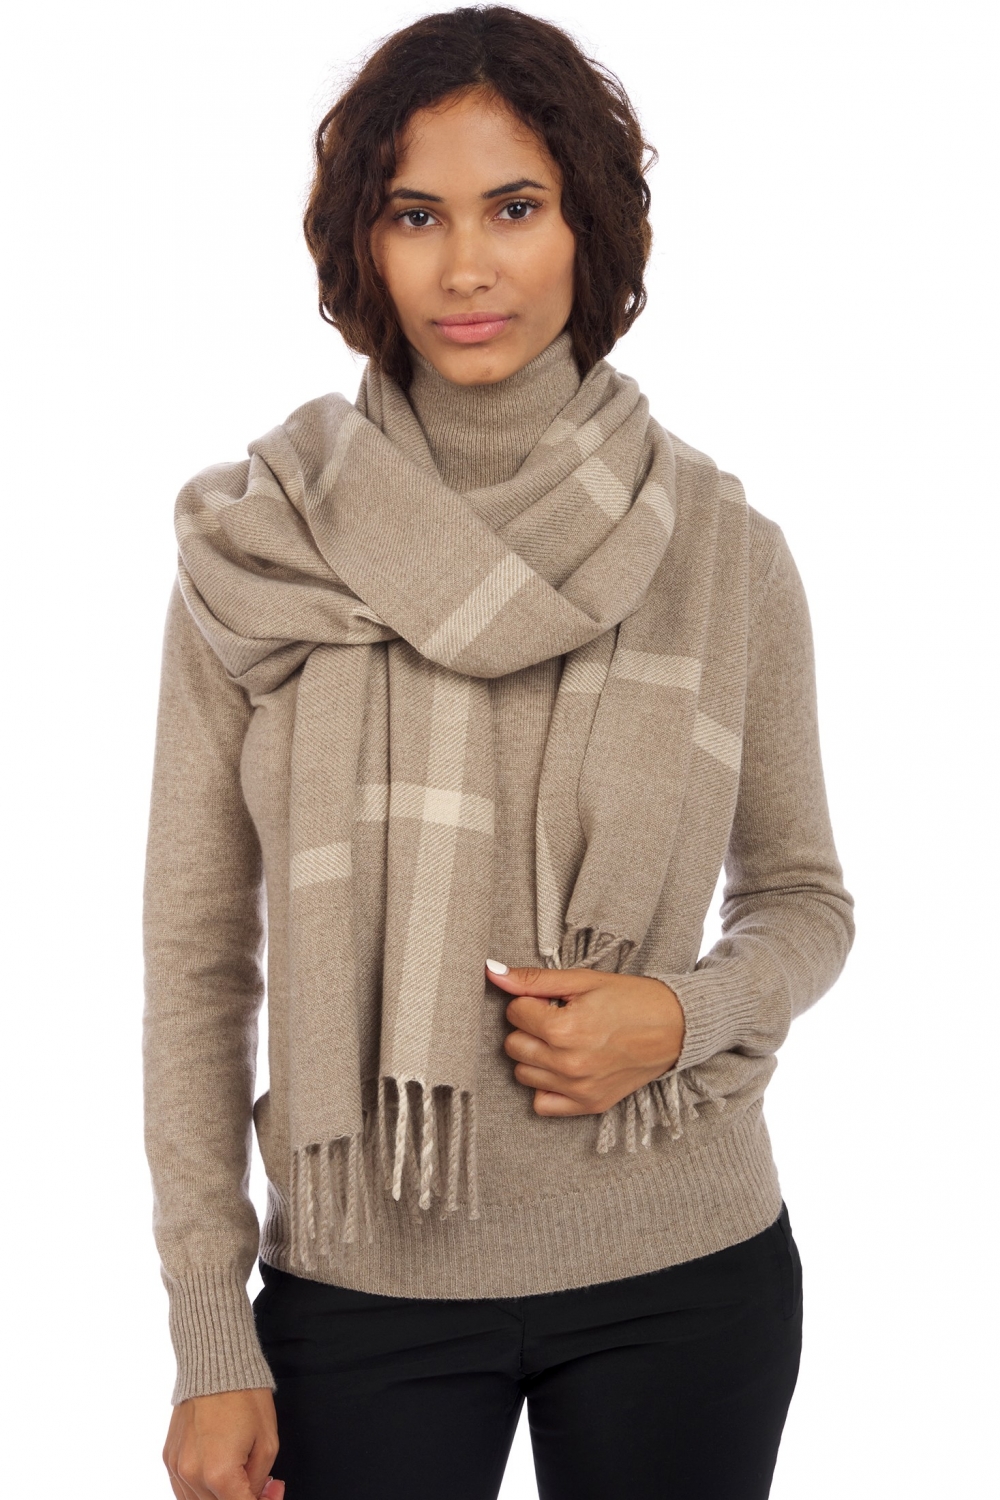 Cashmere accessories scarf mufflers amsterdam natural beige natural brown 50 x 210 cm